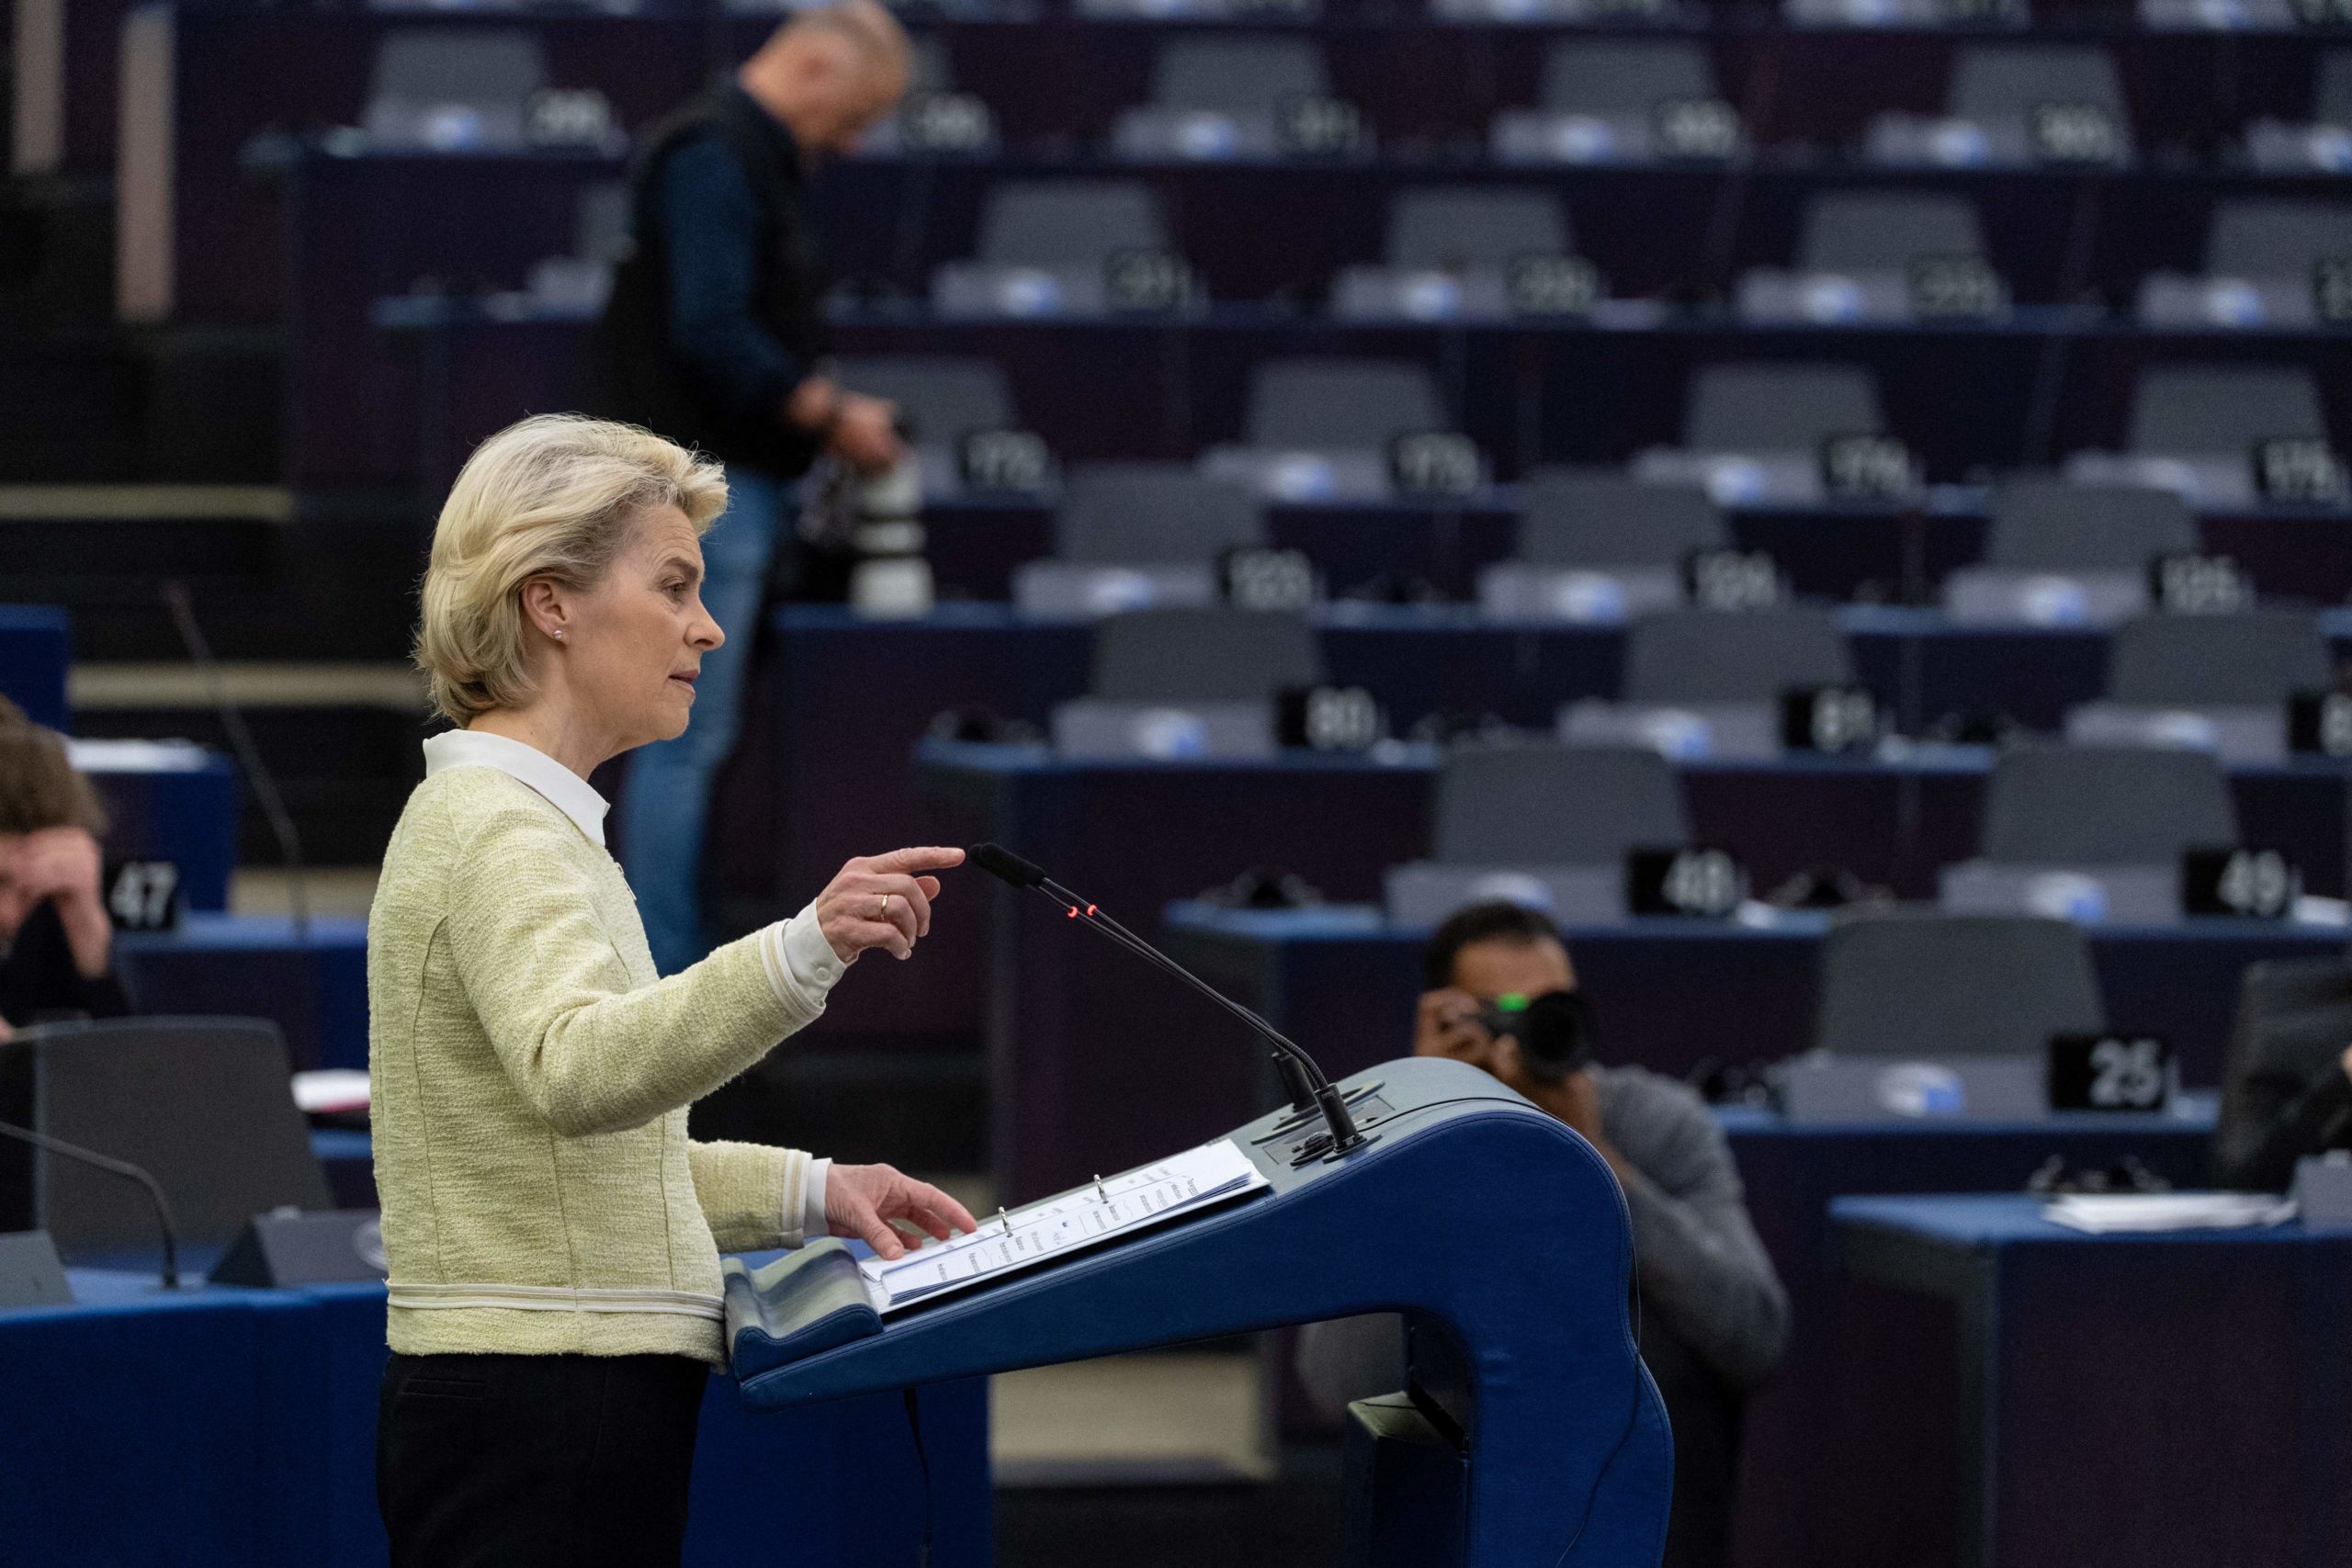 European Commission President Ursula von der Leyen speaks at the European Parliament in Strasbourg, France, on Wednesday. (Patrick Hertzog/AFP via Getty Images)